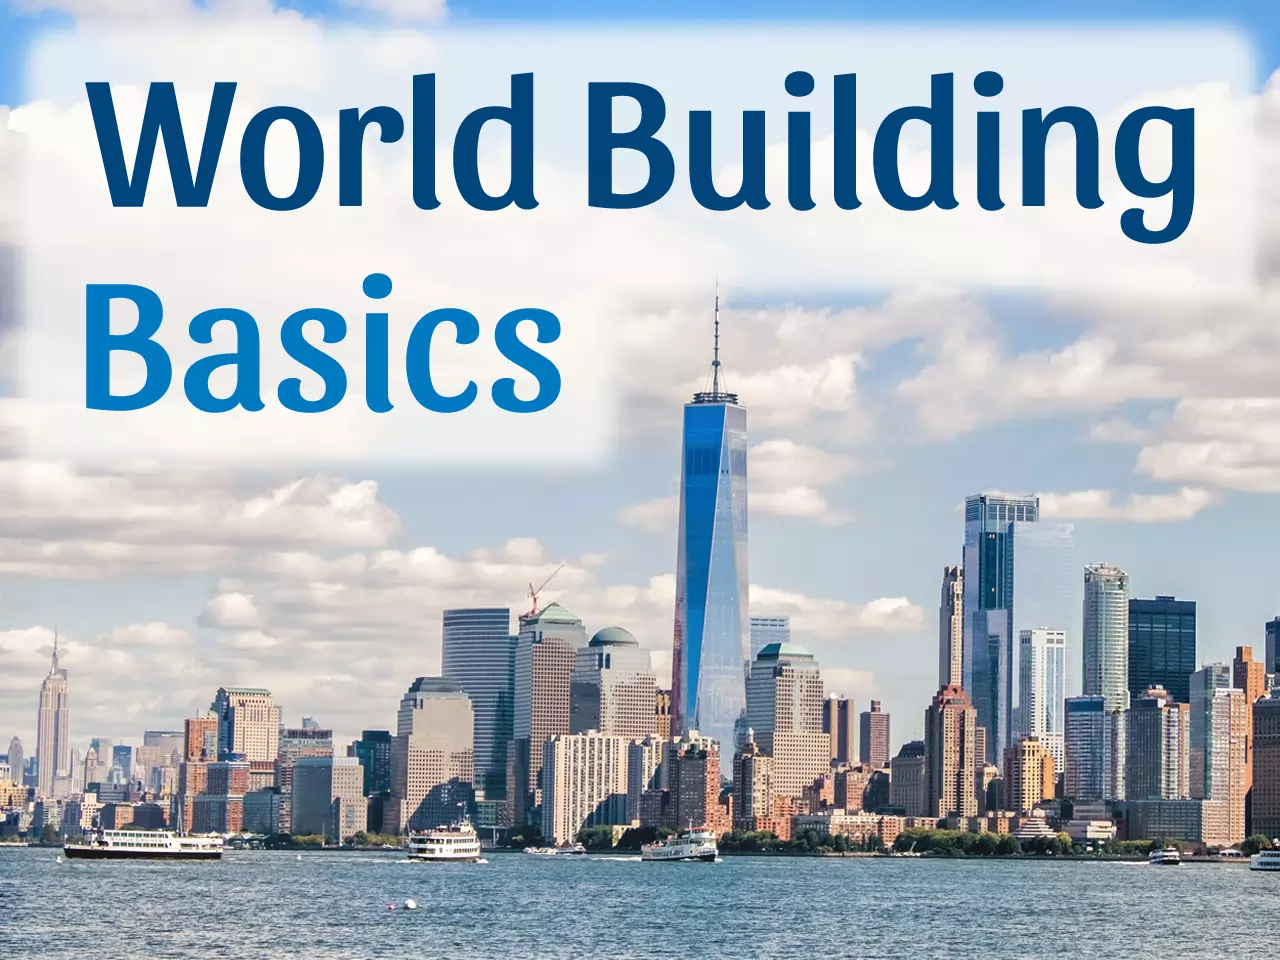 World Building Basics